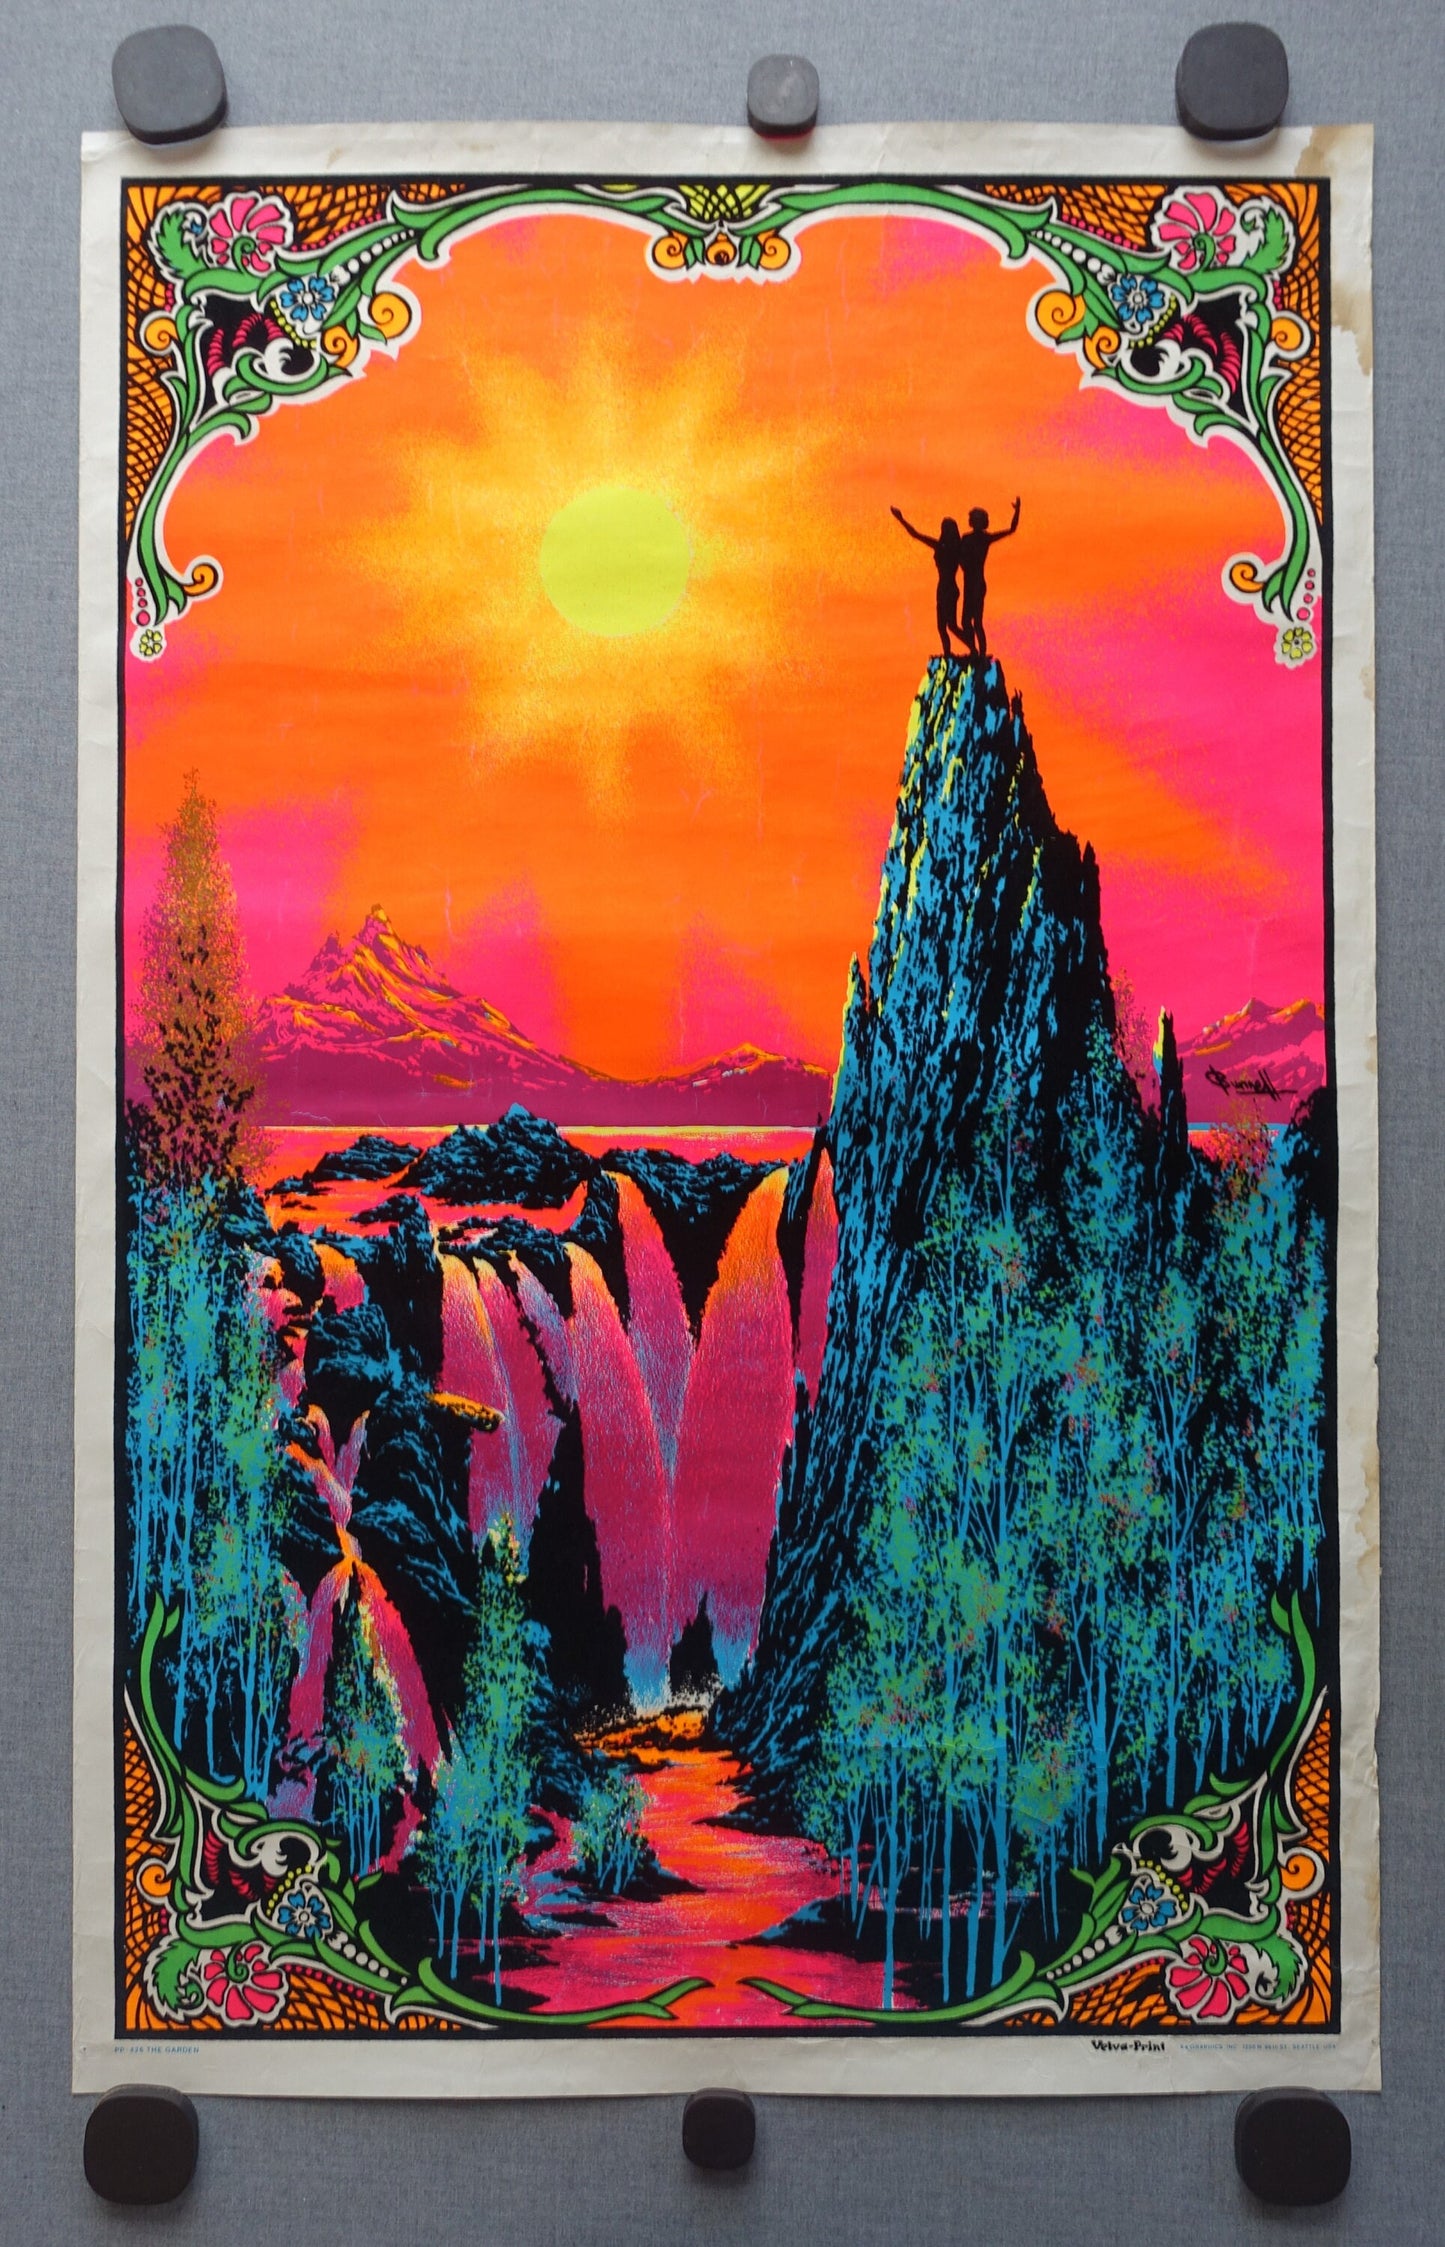 1970s The Garden Psychedelic Velvet Poster - Original Vintage Poster